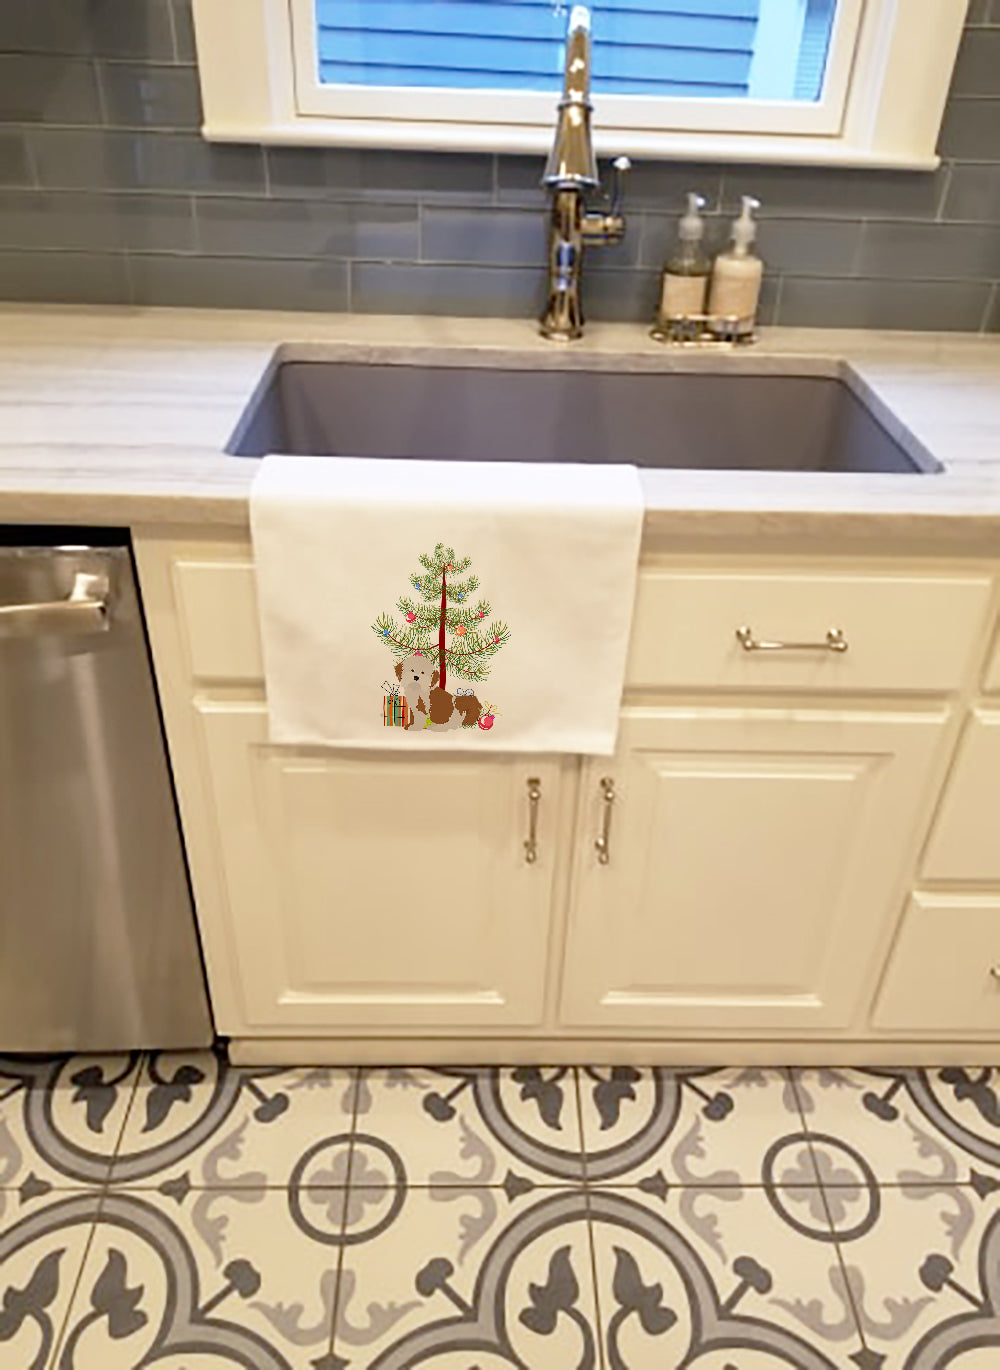 Buy this Havanese Christmas Tree White Kitchen Towel Set of 2